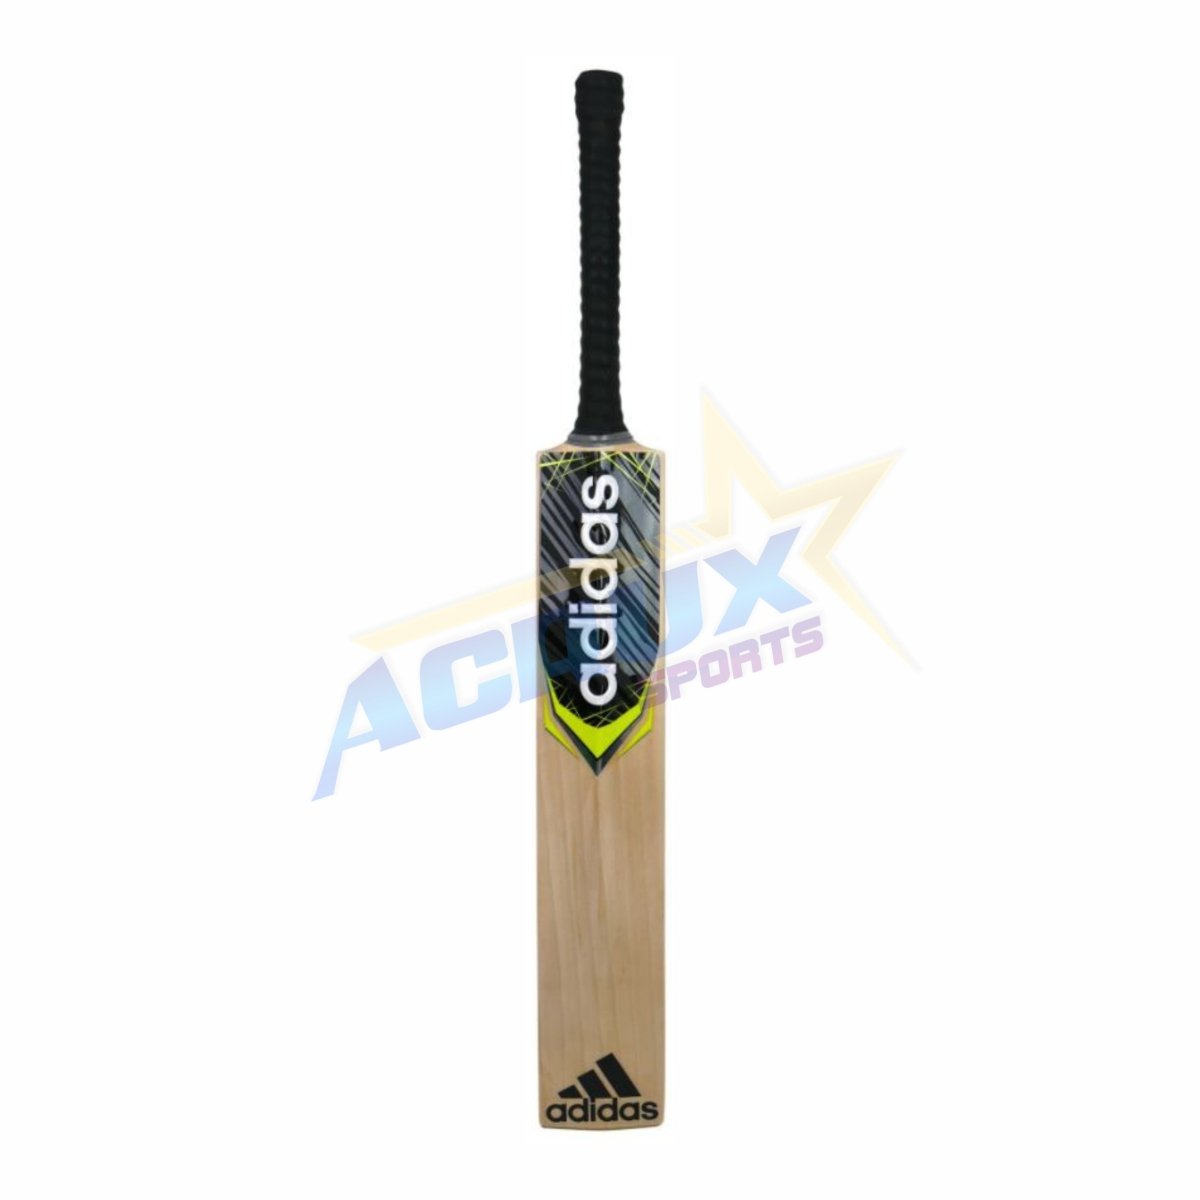 Adidas Incurza 6.0 Kashmir Willow Cricket Bat Size 5.